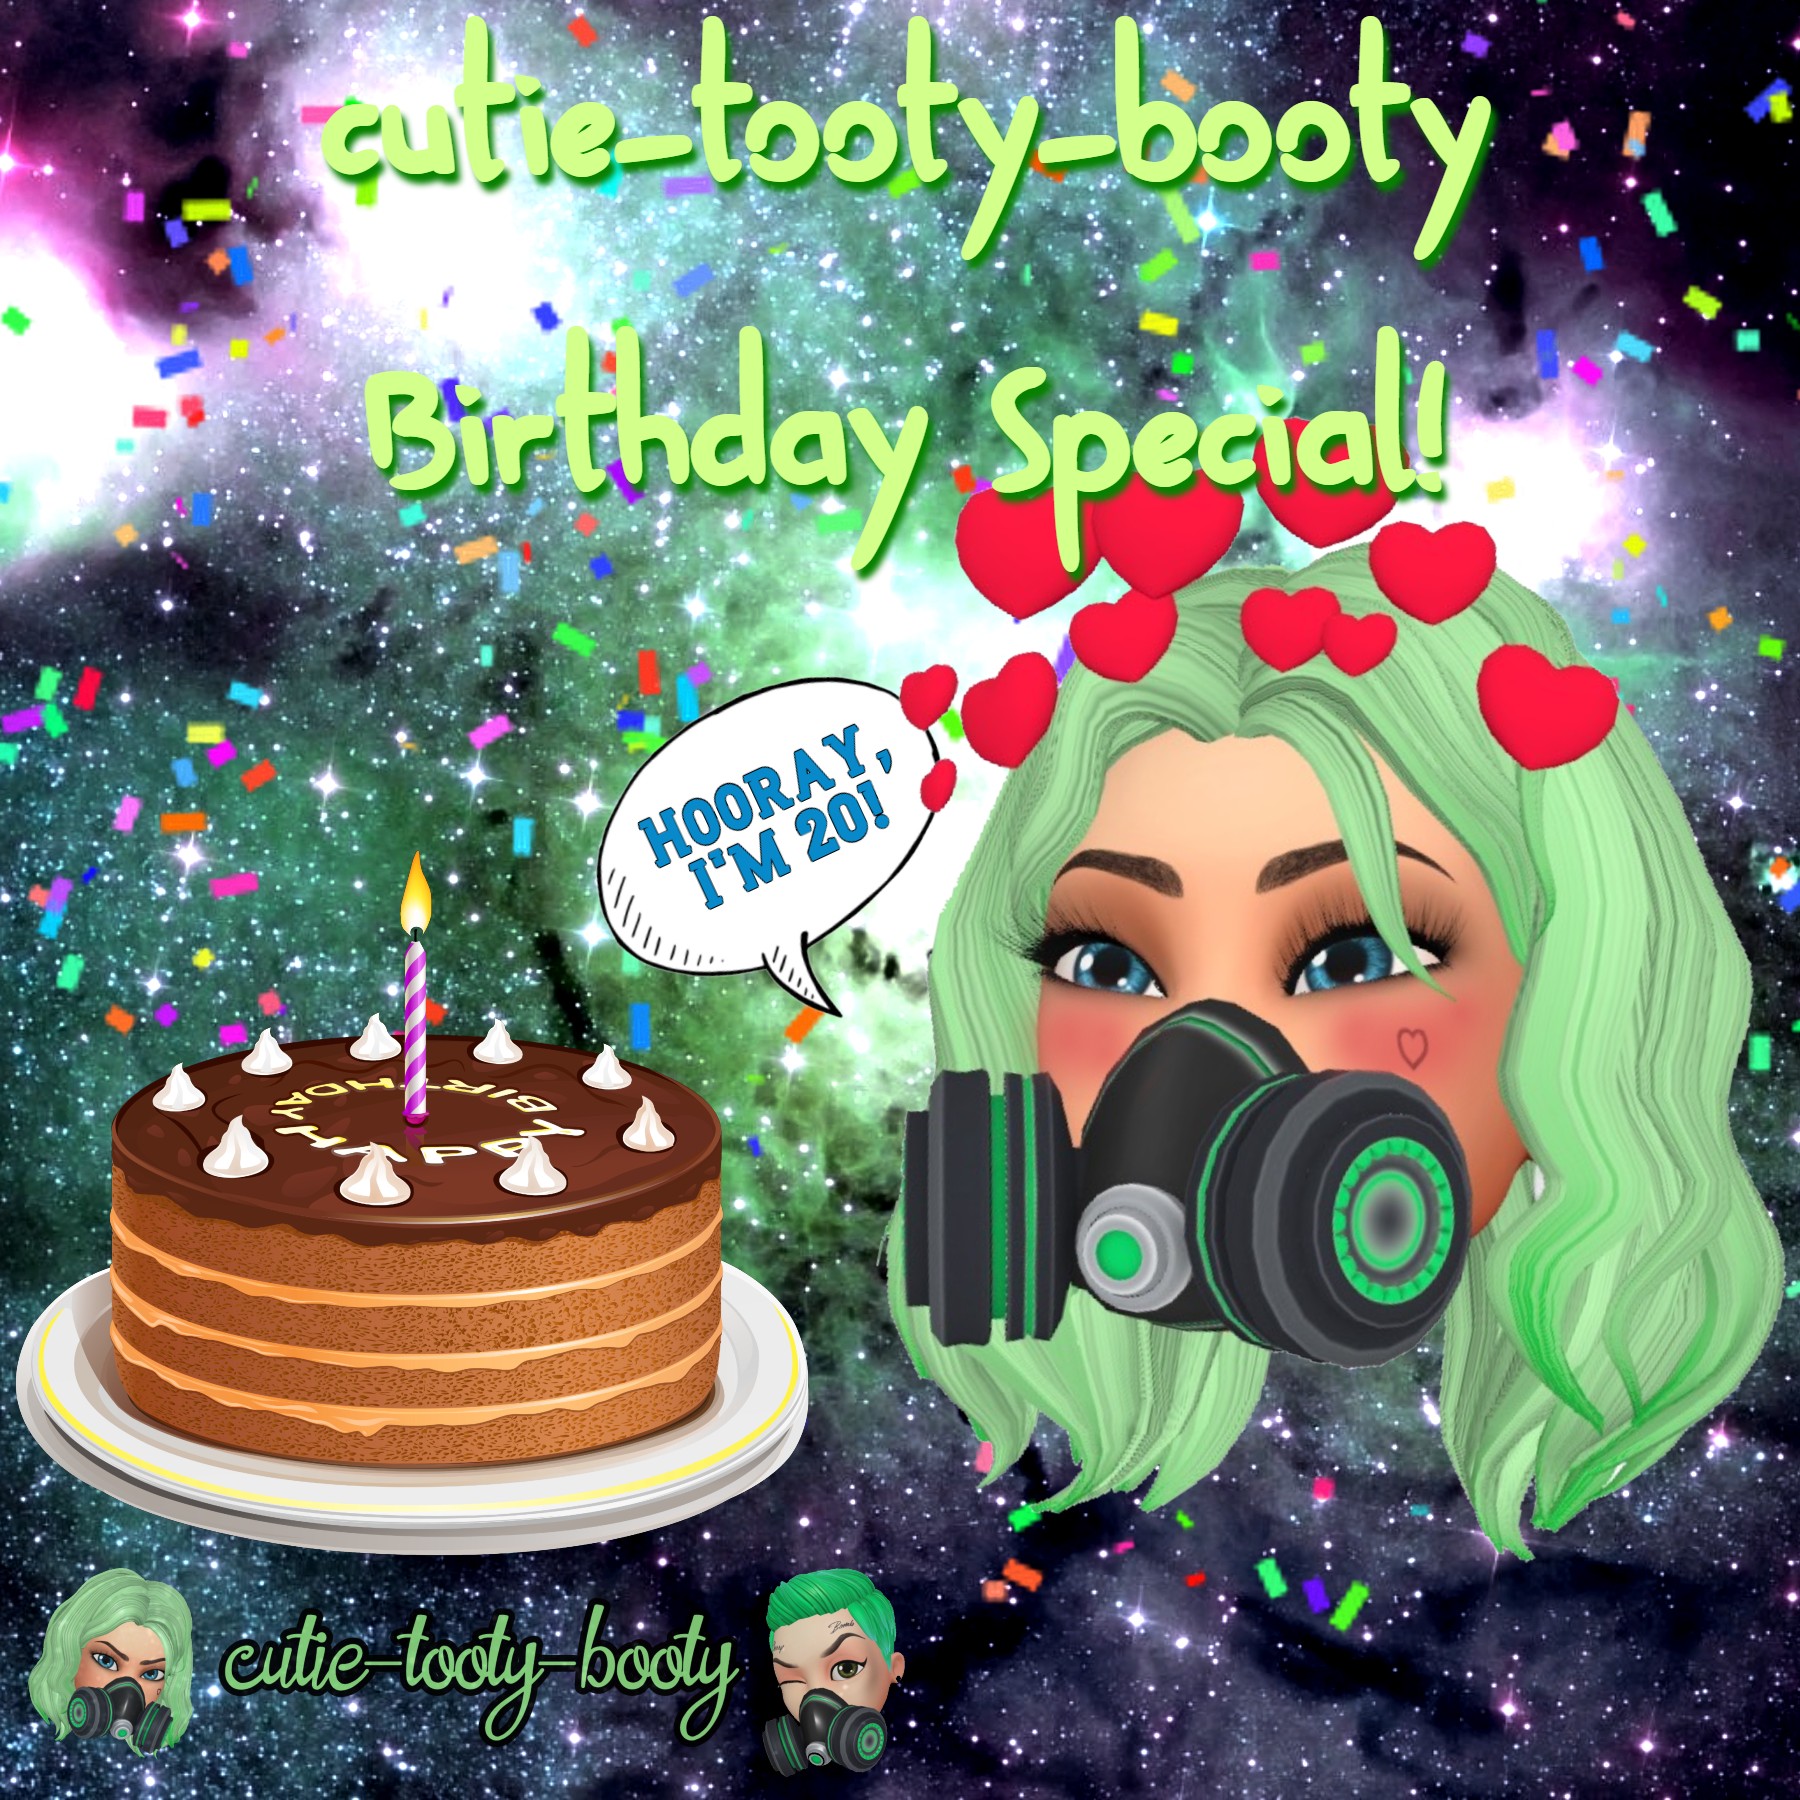 cutie-tooty-booty Birthday Special!